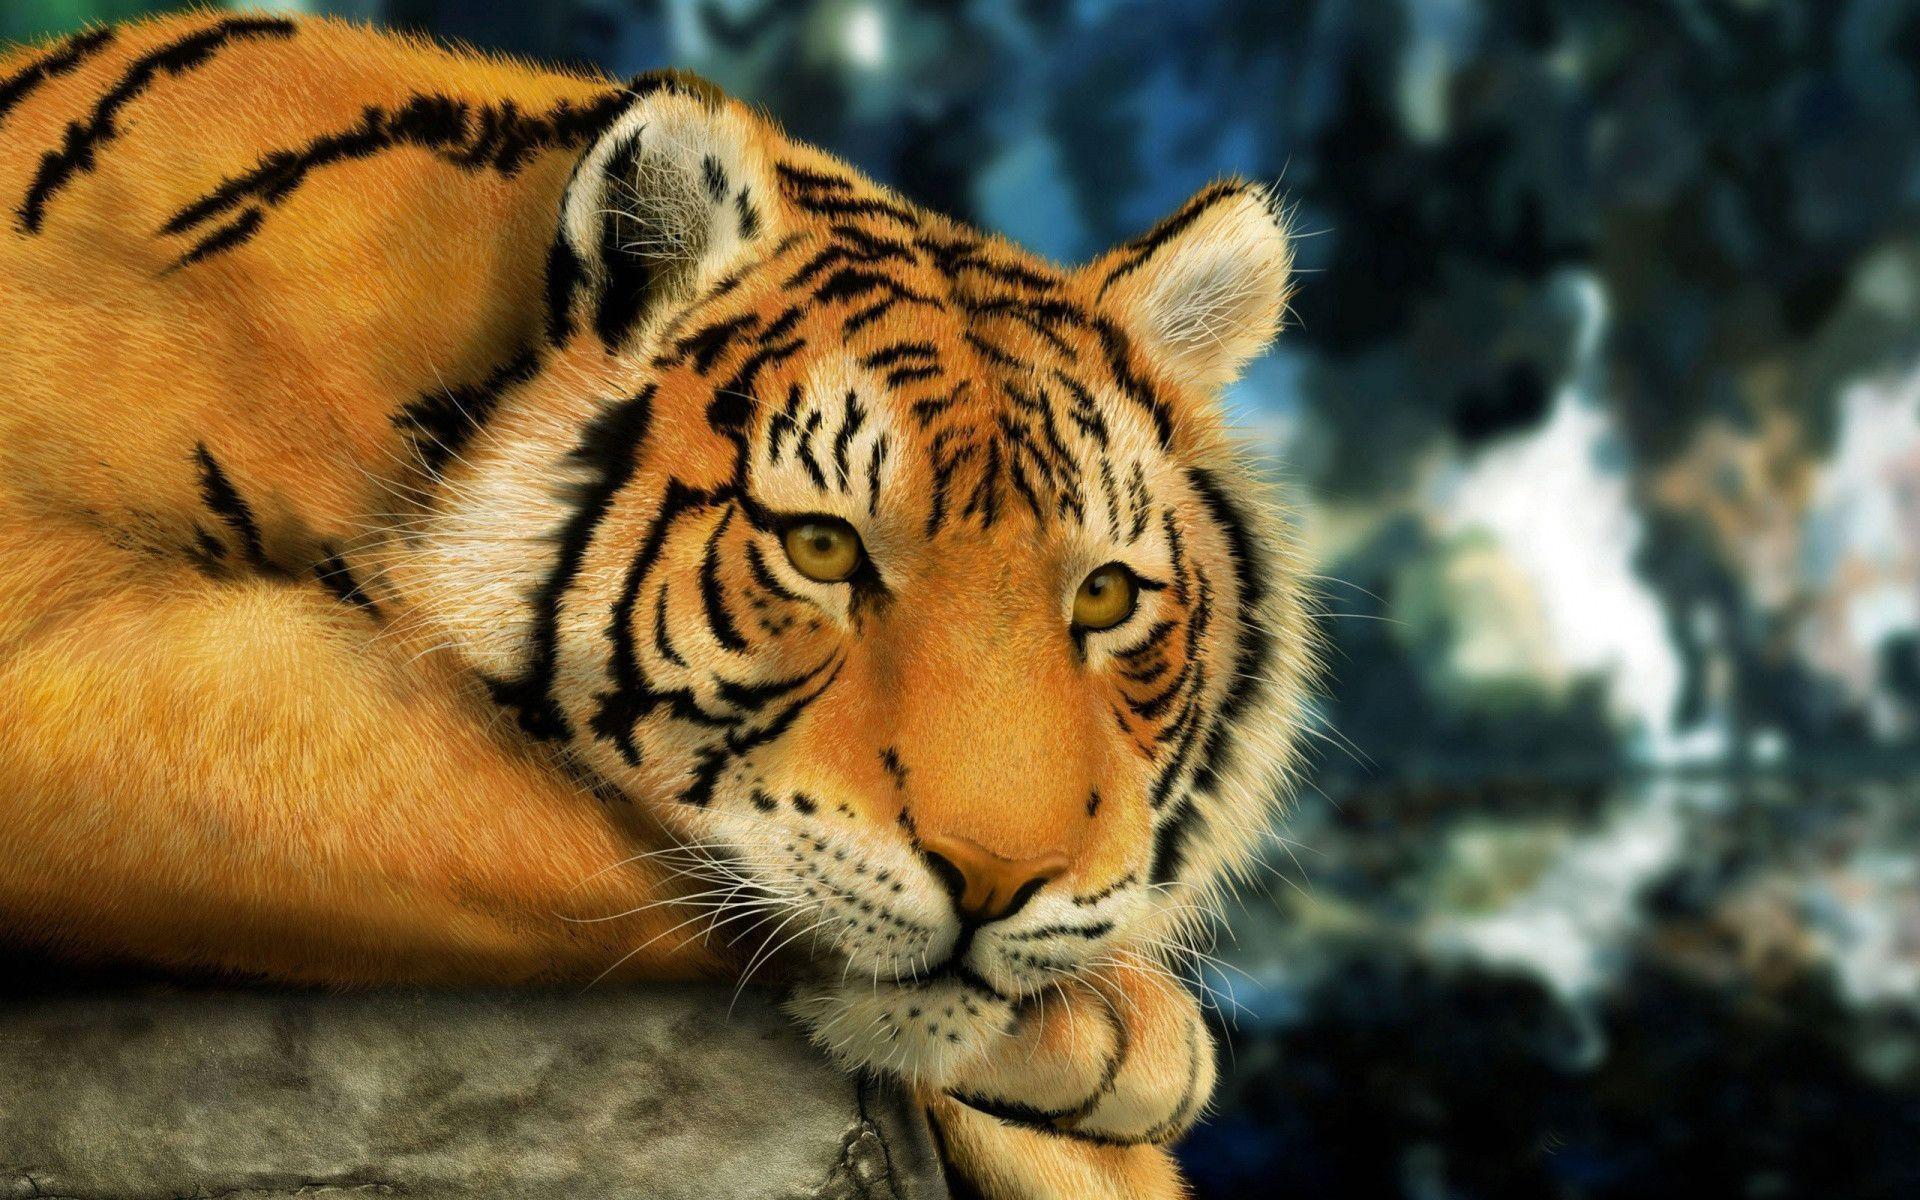 Tiger Image For Desktop Free Desk HD Wallpaper. lzamgs